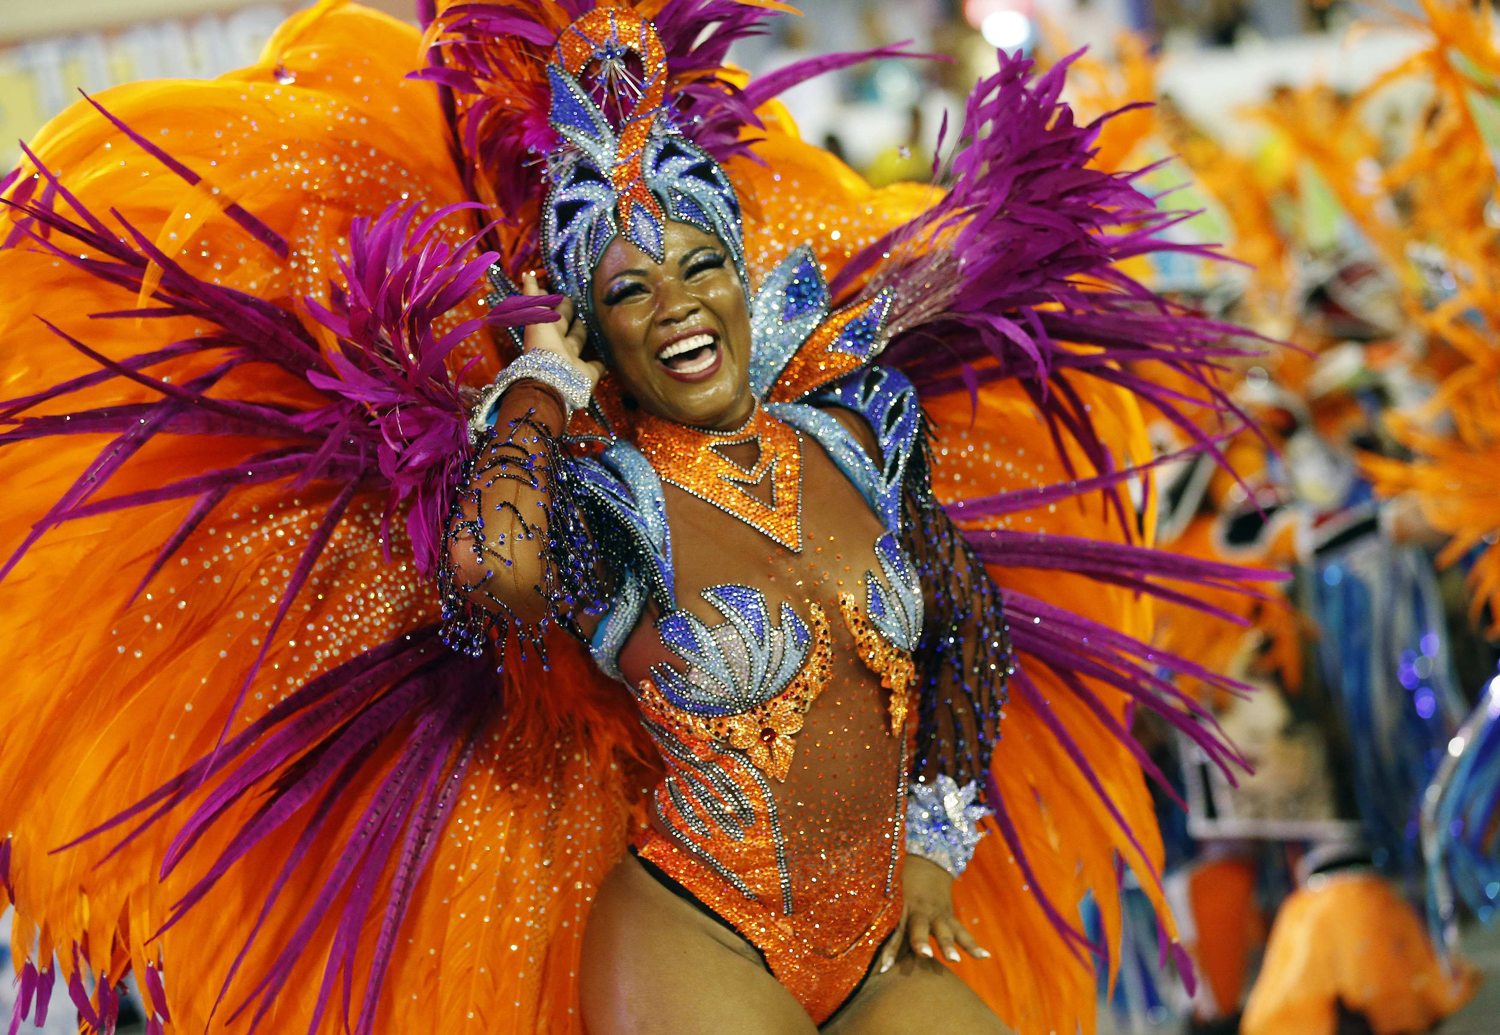 https://media3.s-nbcnews.com/i/MSNBC/Components/Slideshows/_production/ss-130207-brazil-carnival/ss-130211-brazil-carnival-18.jpg